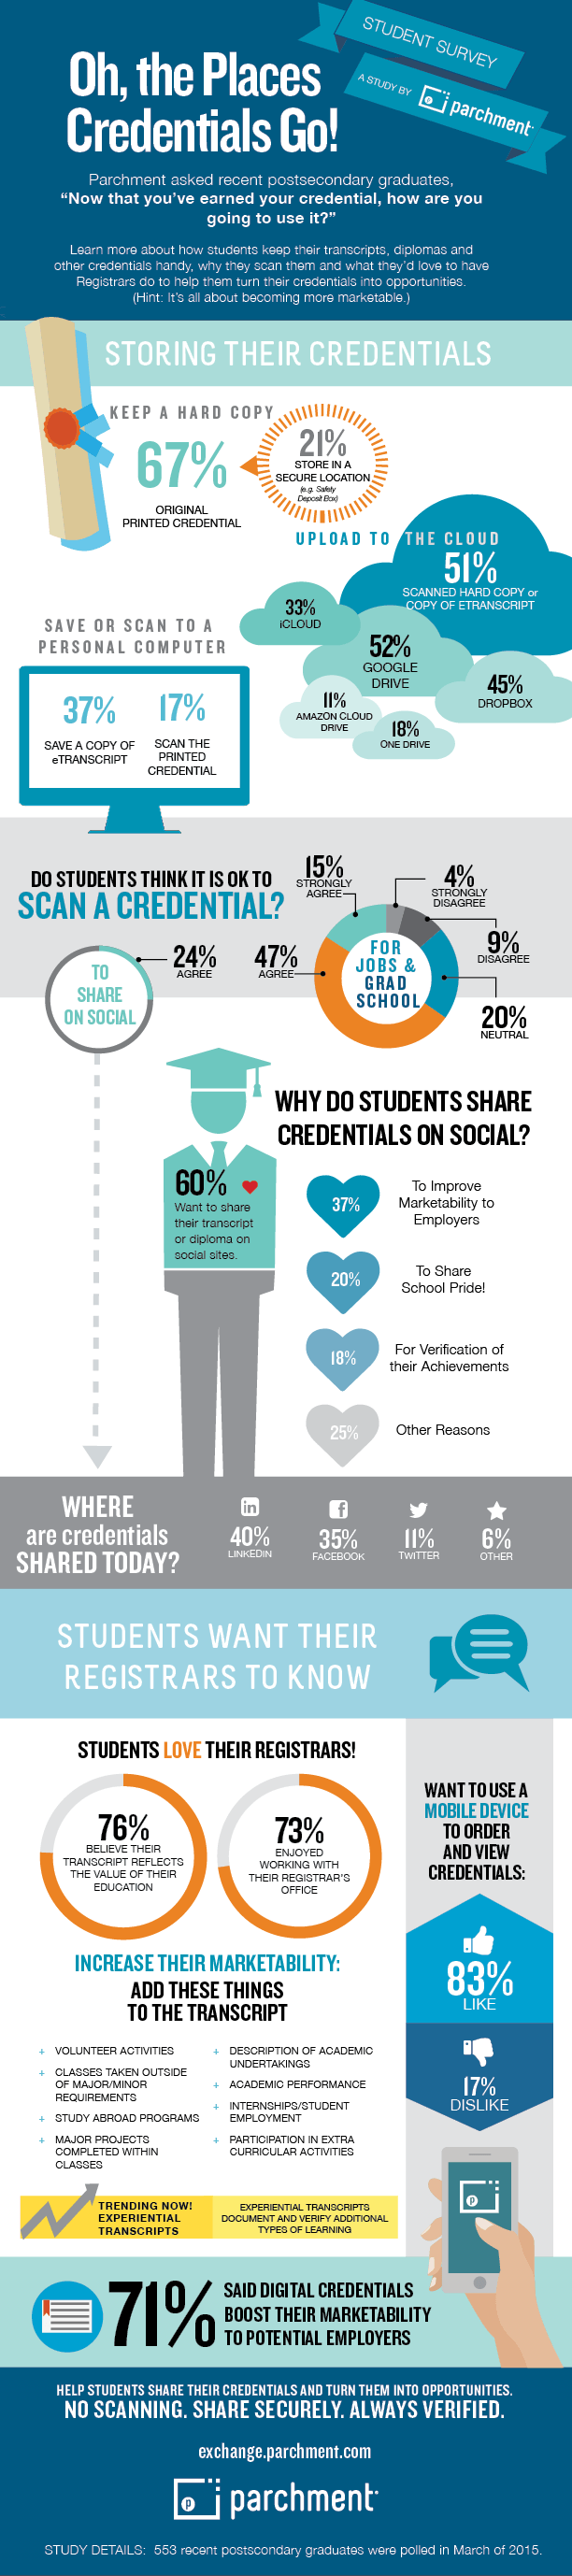 studentsurvey_infographic-Thumbnail